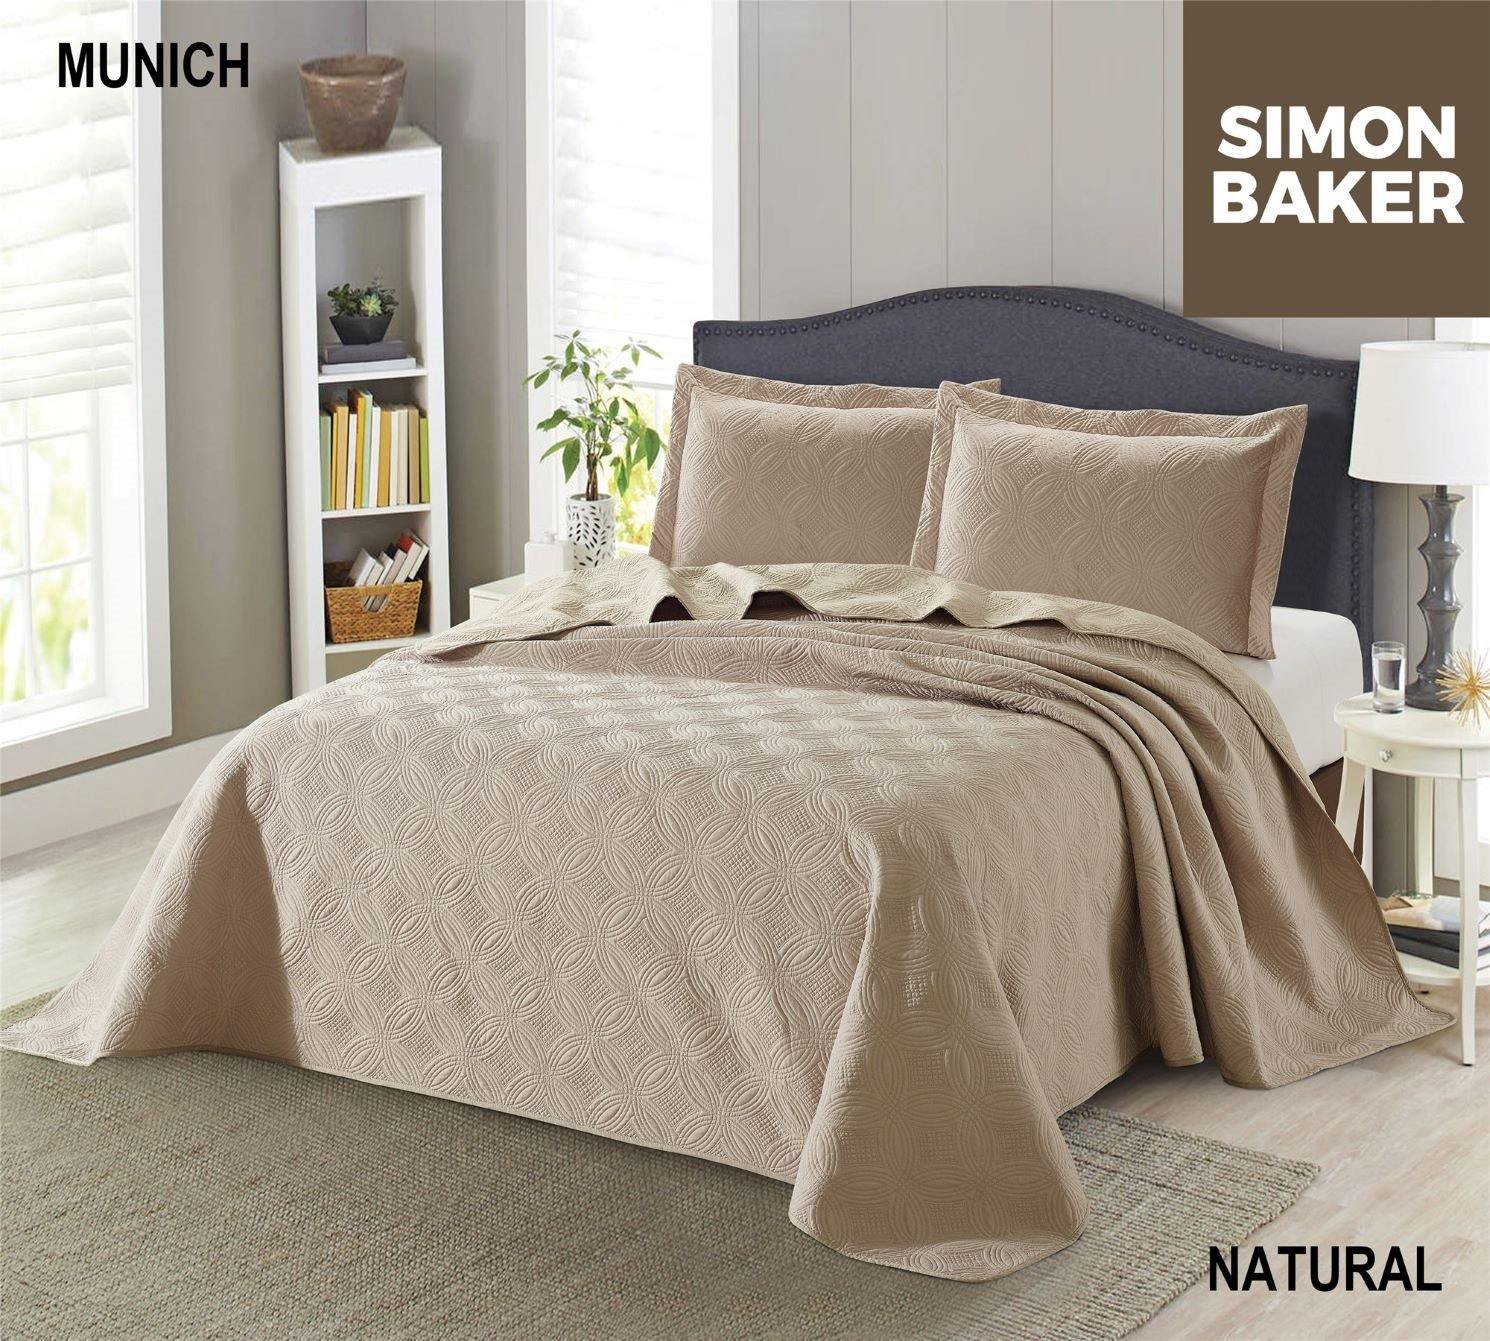 Simon Baker | Munich Bedspread Natural (Various Sizes)